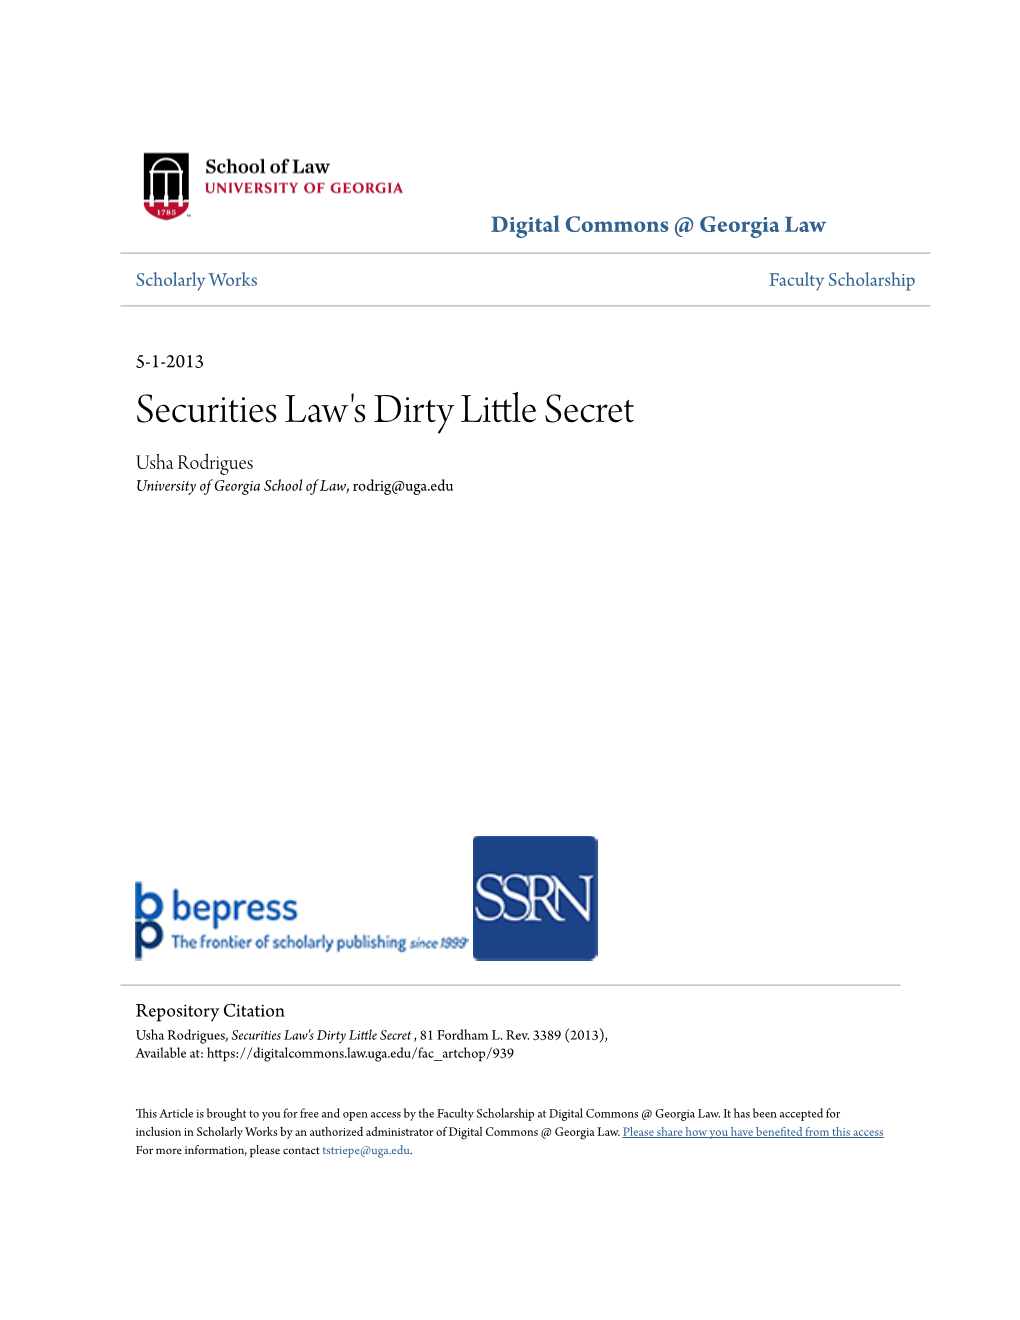 Securities Law's Dirty Little Secret , 81 Fordham L